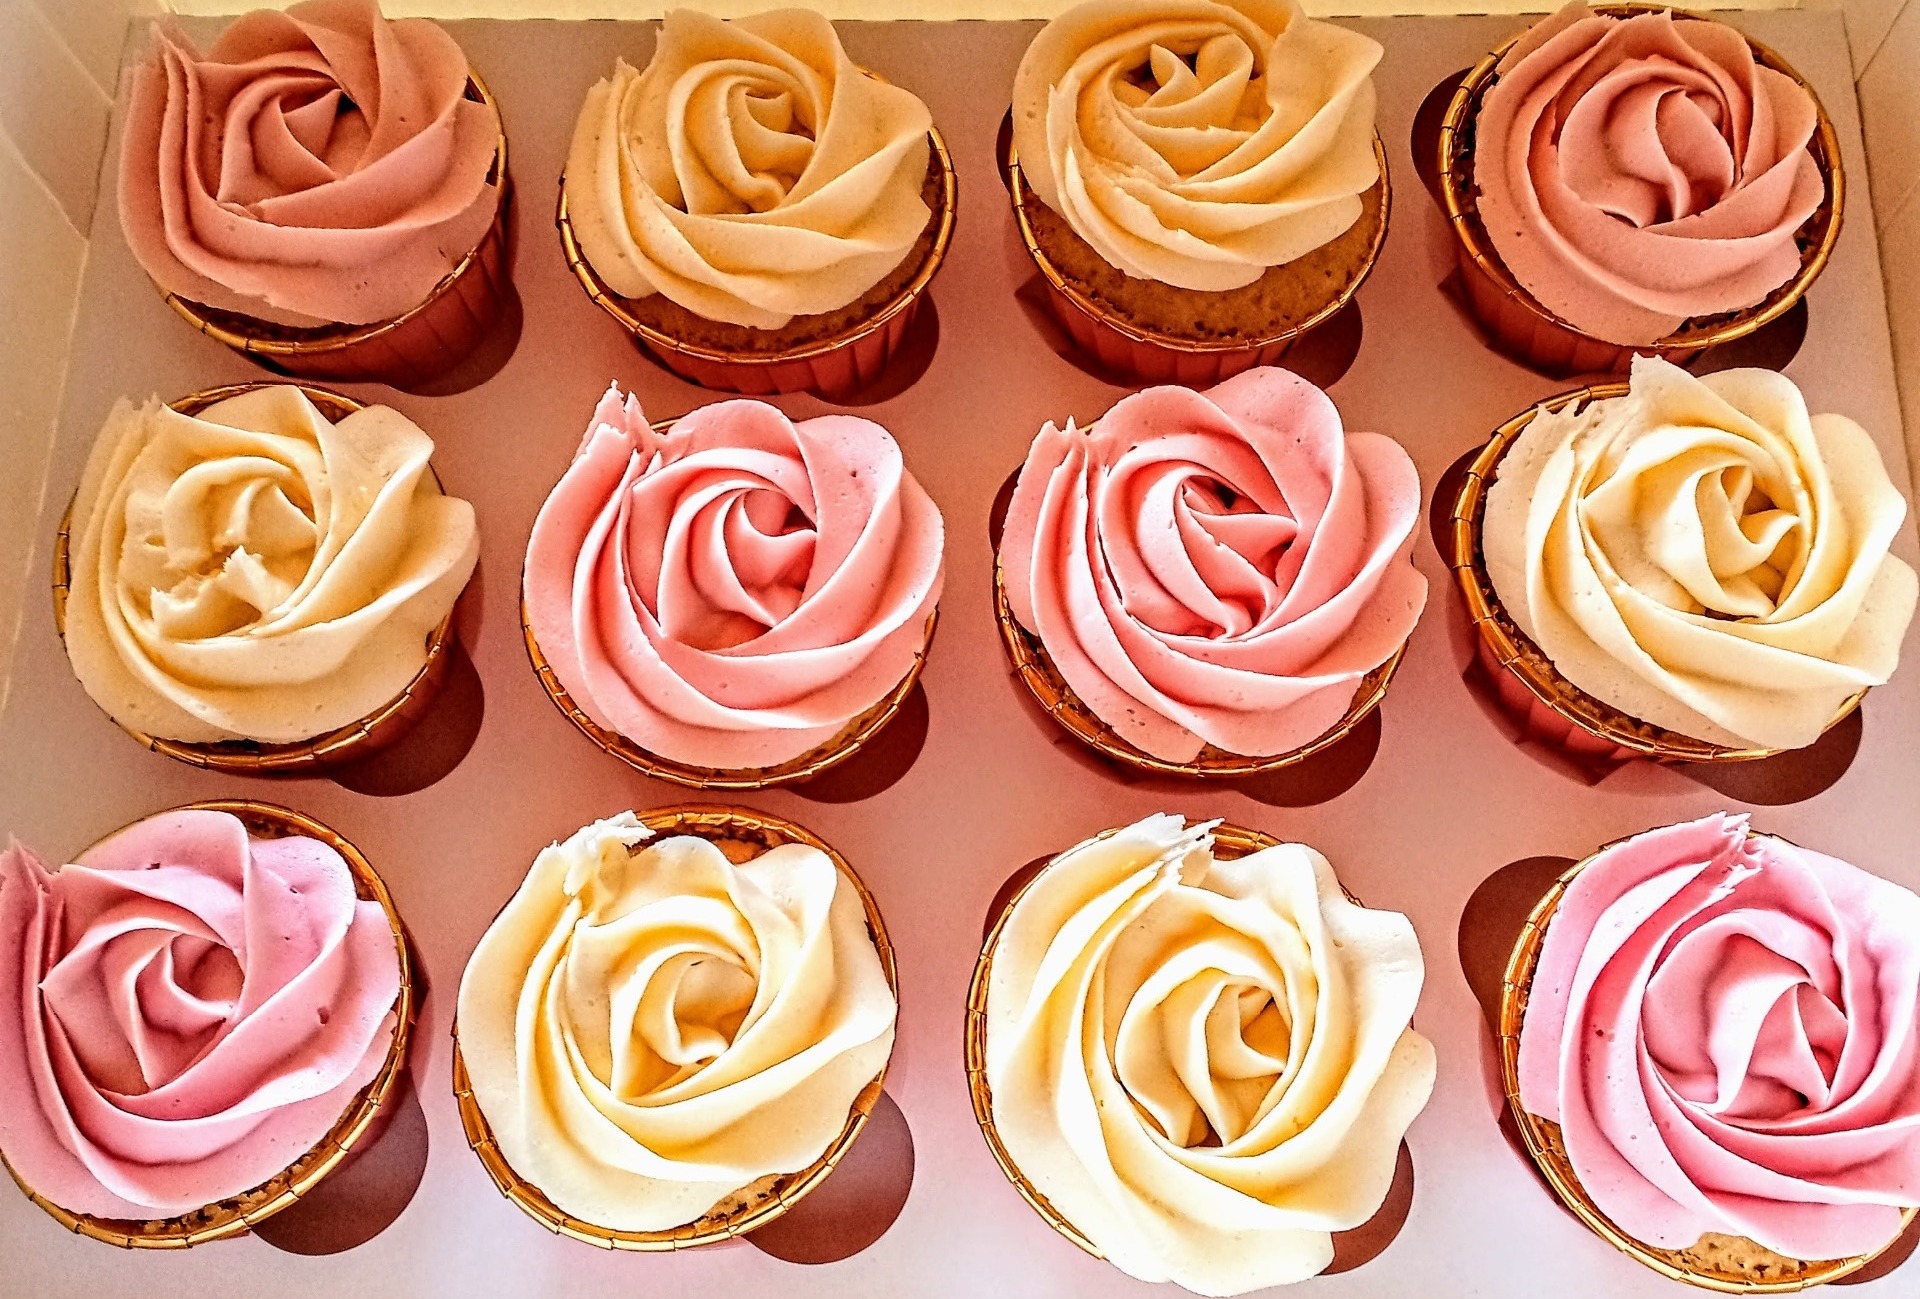 Plain rose swirl design cupcakes